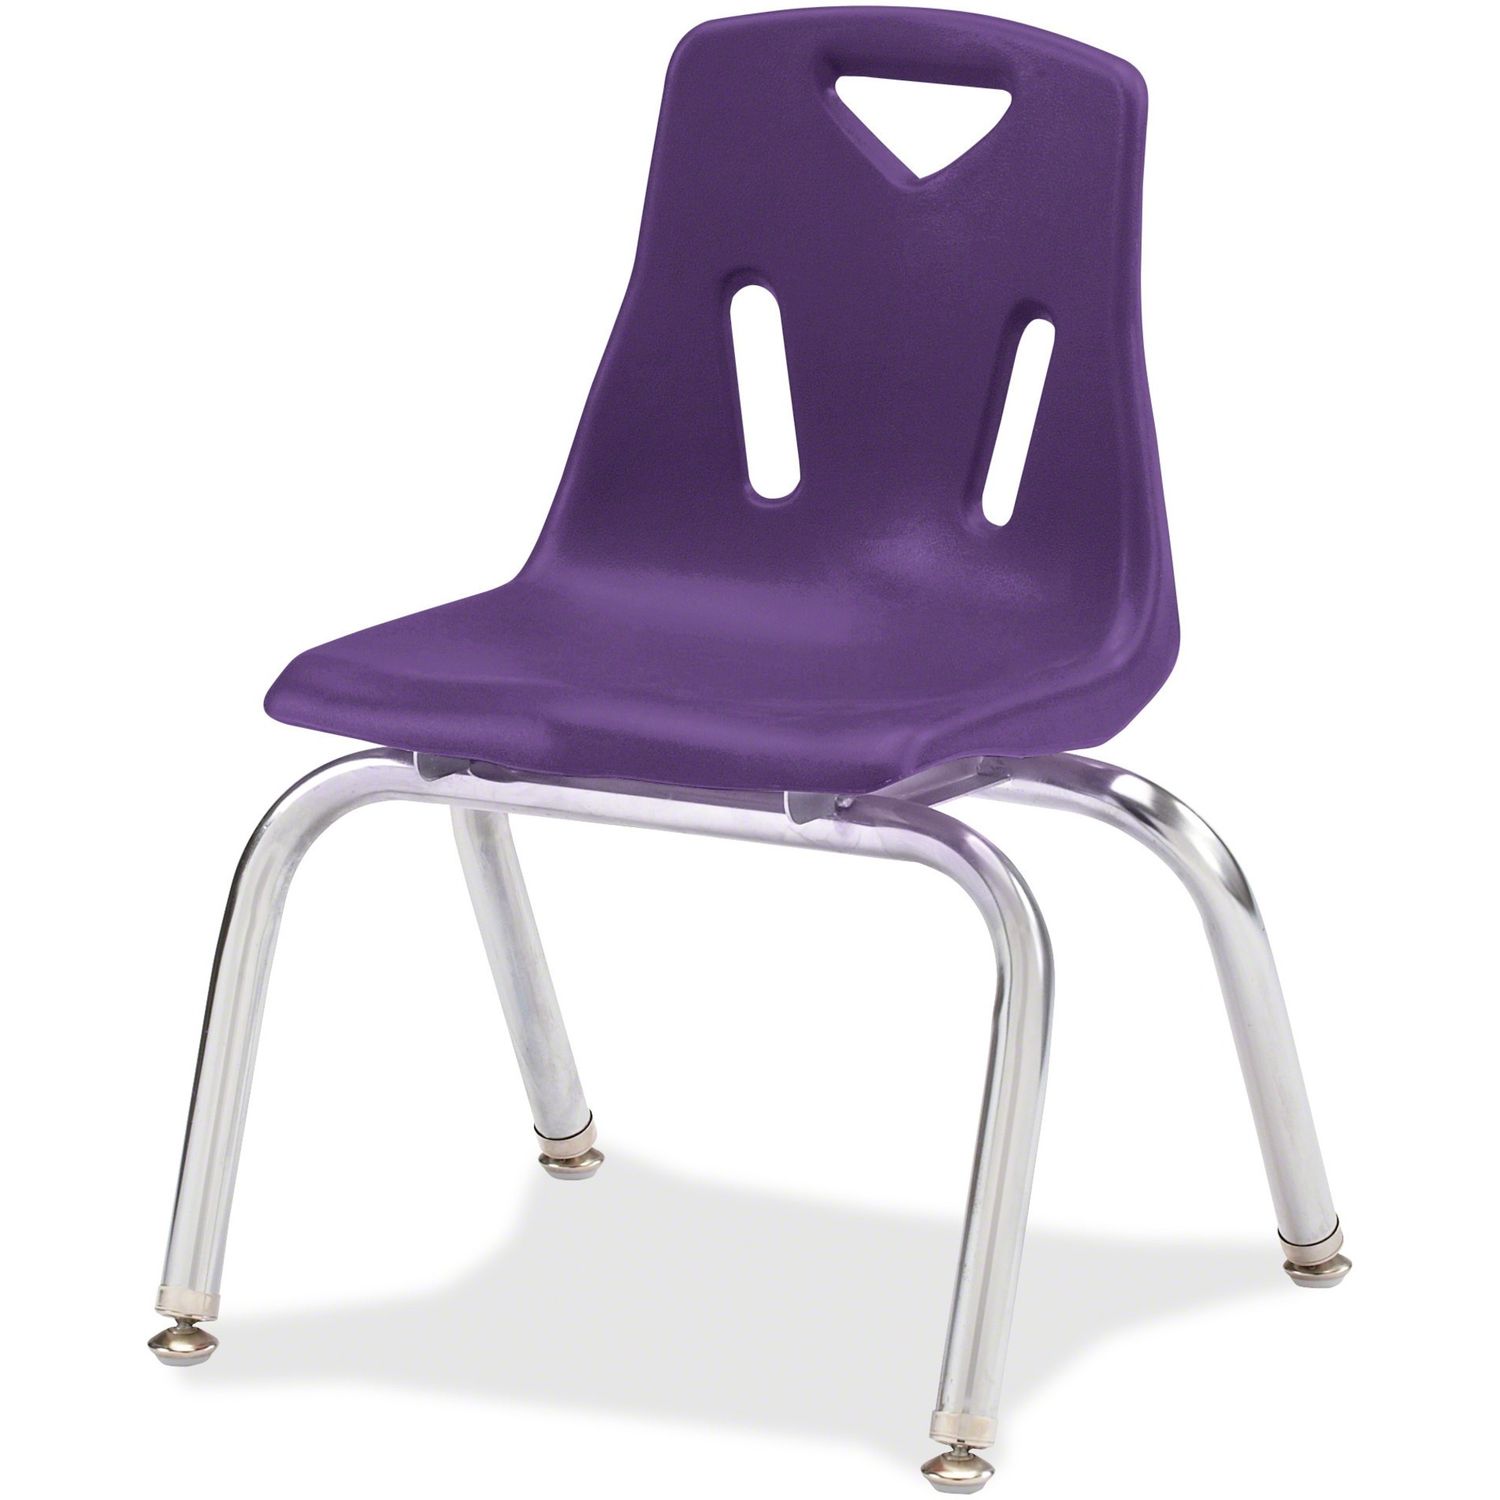 Berries Stacking Chair Steel Frame, Four-legged Base, Purple, Polypropylene, 1 Each